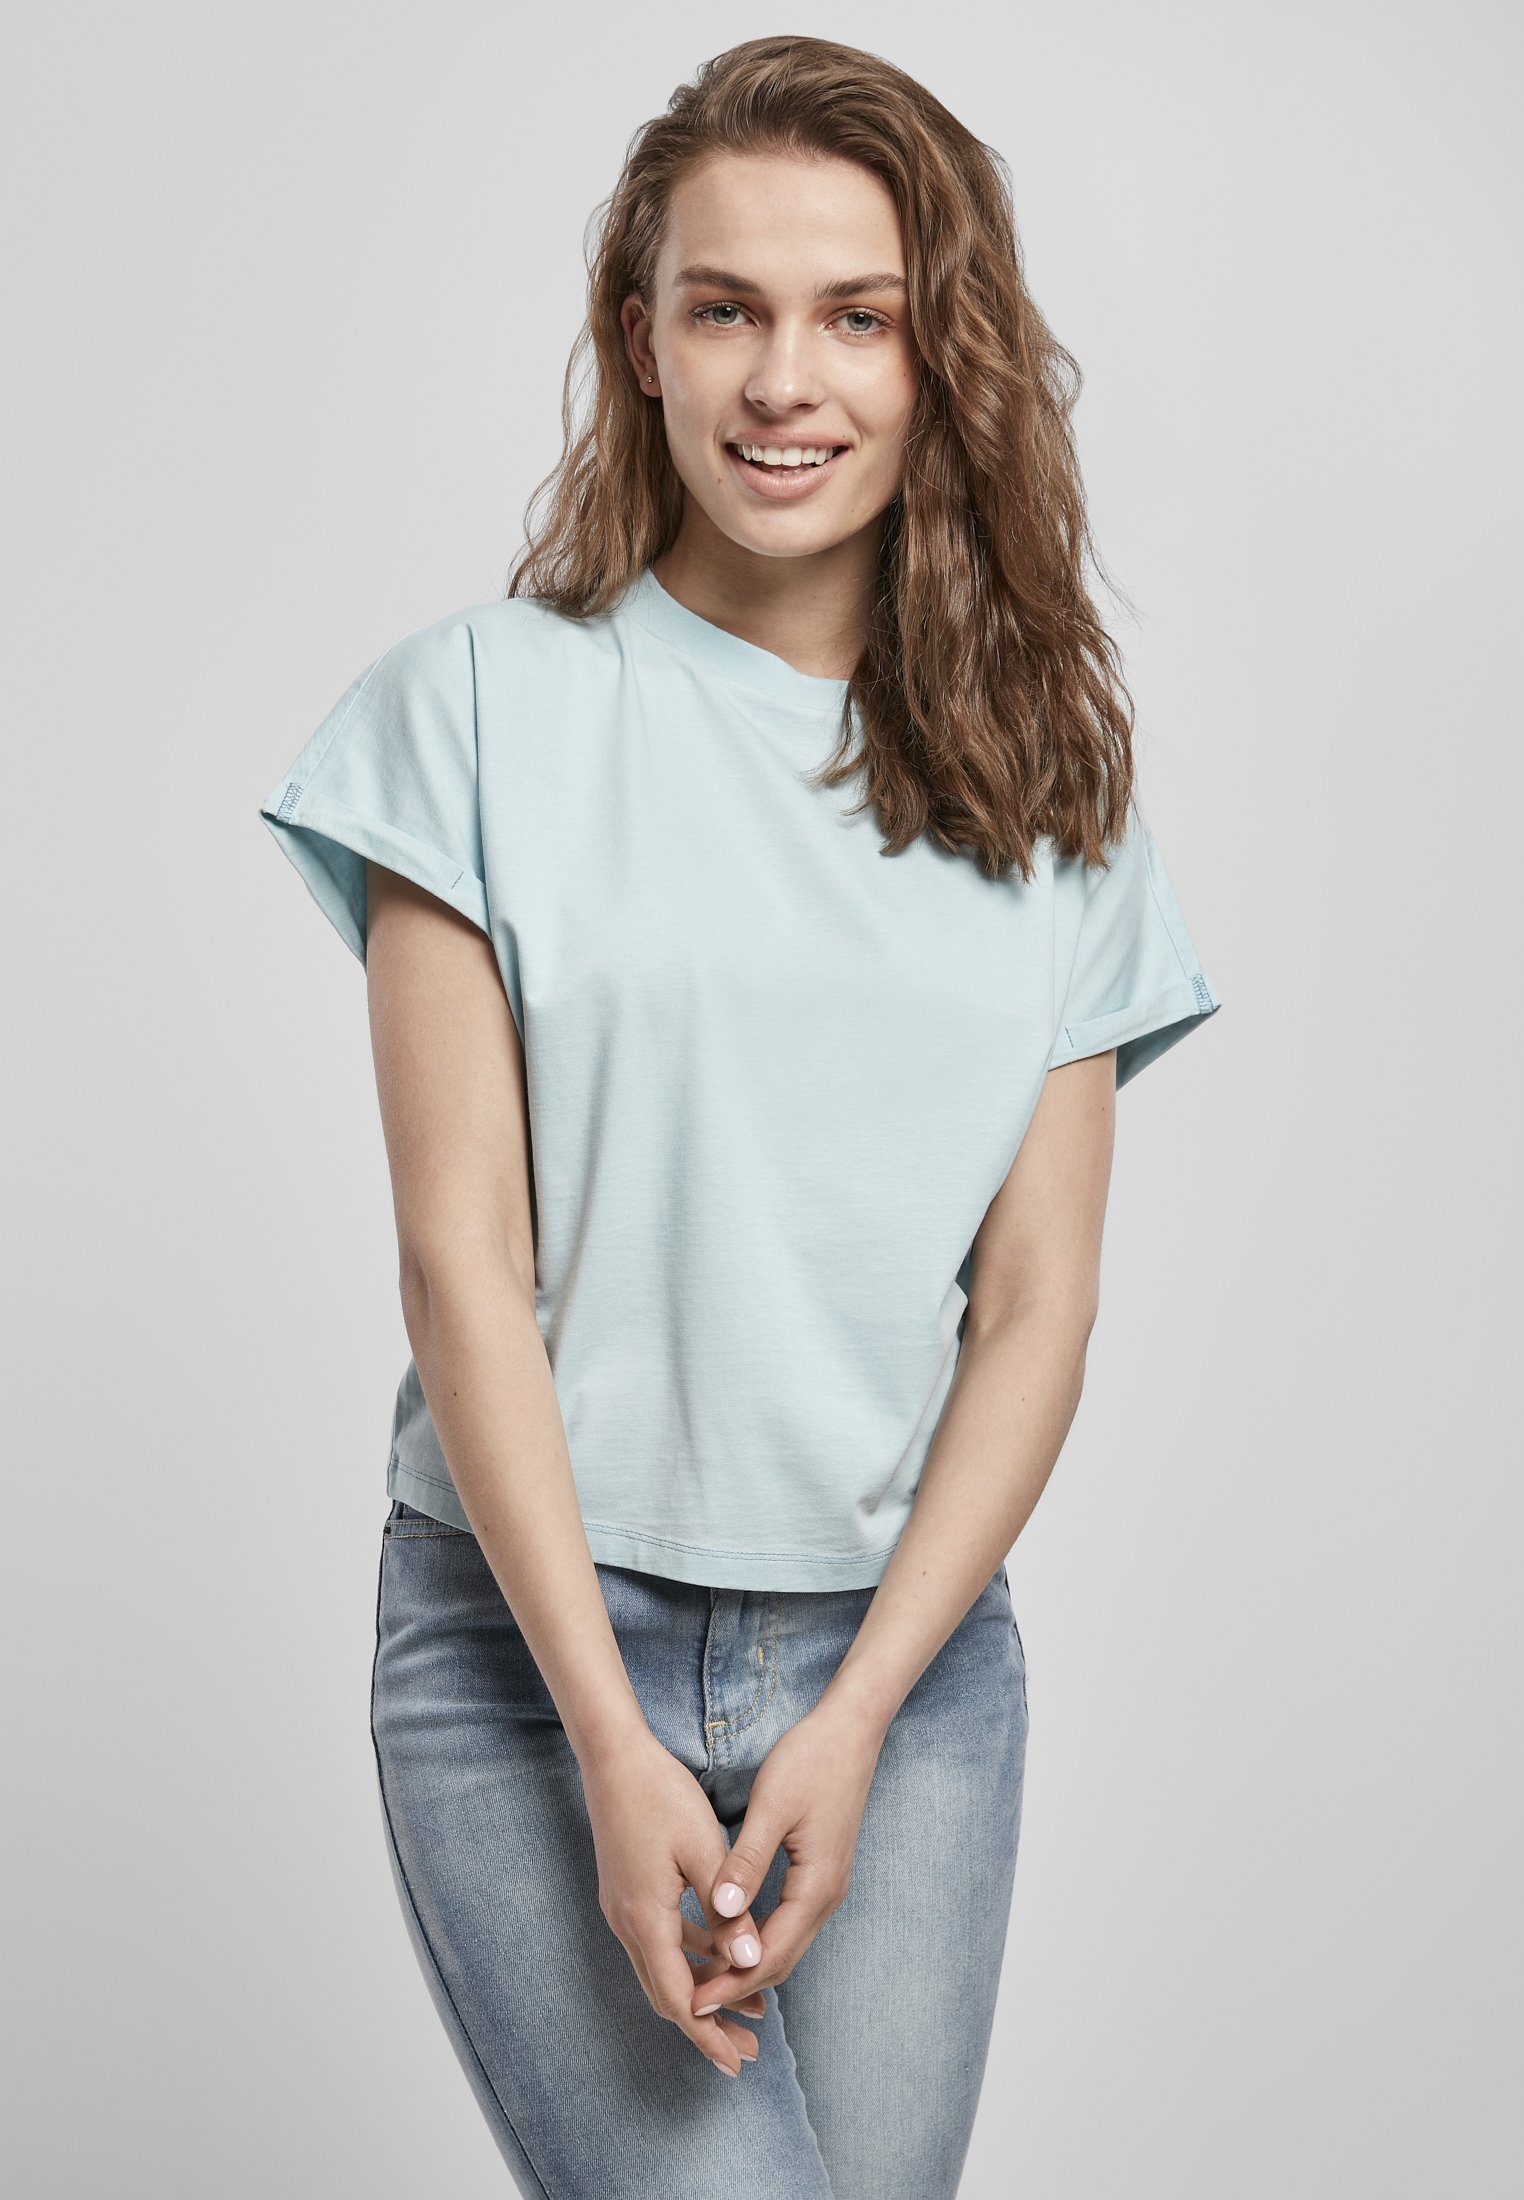 Urban Classics Damen T-Shirts online kaufen | OTTO